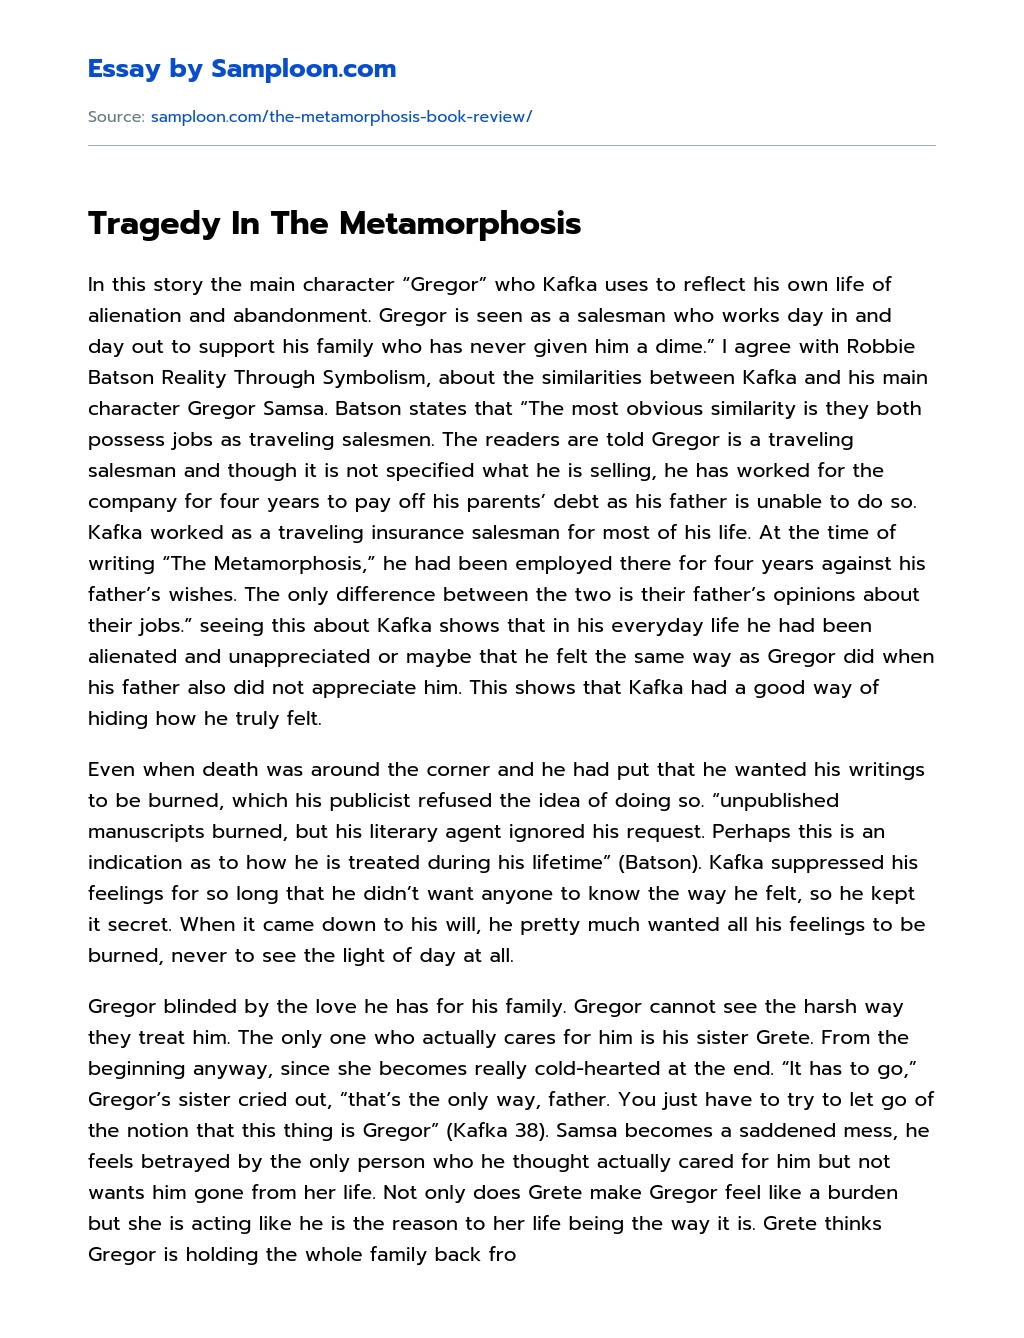 Tragedy In The Metamorphosis Summary essay